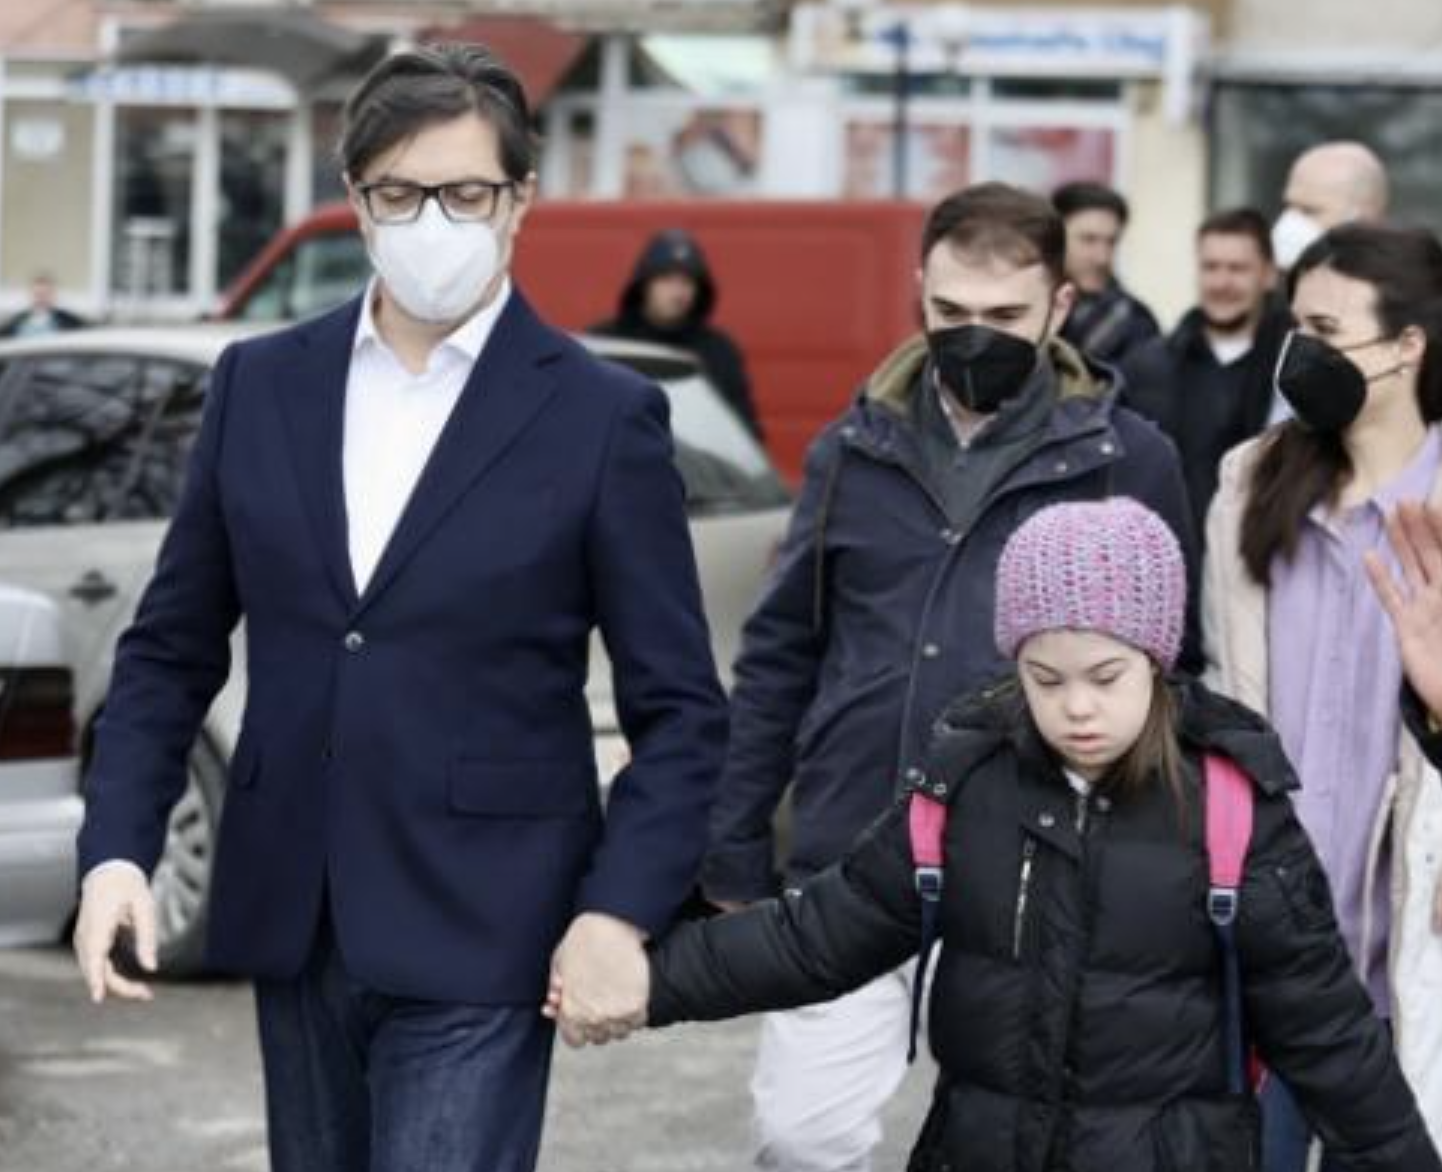 President Stevo Pendarovski held Embla Ademi's hand as he walked her to her school in the city of Gostivar on Monday.